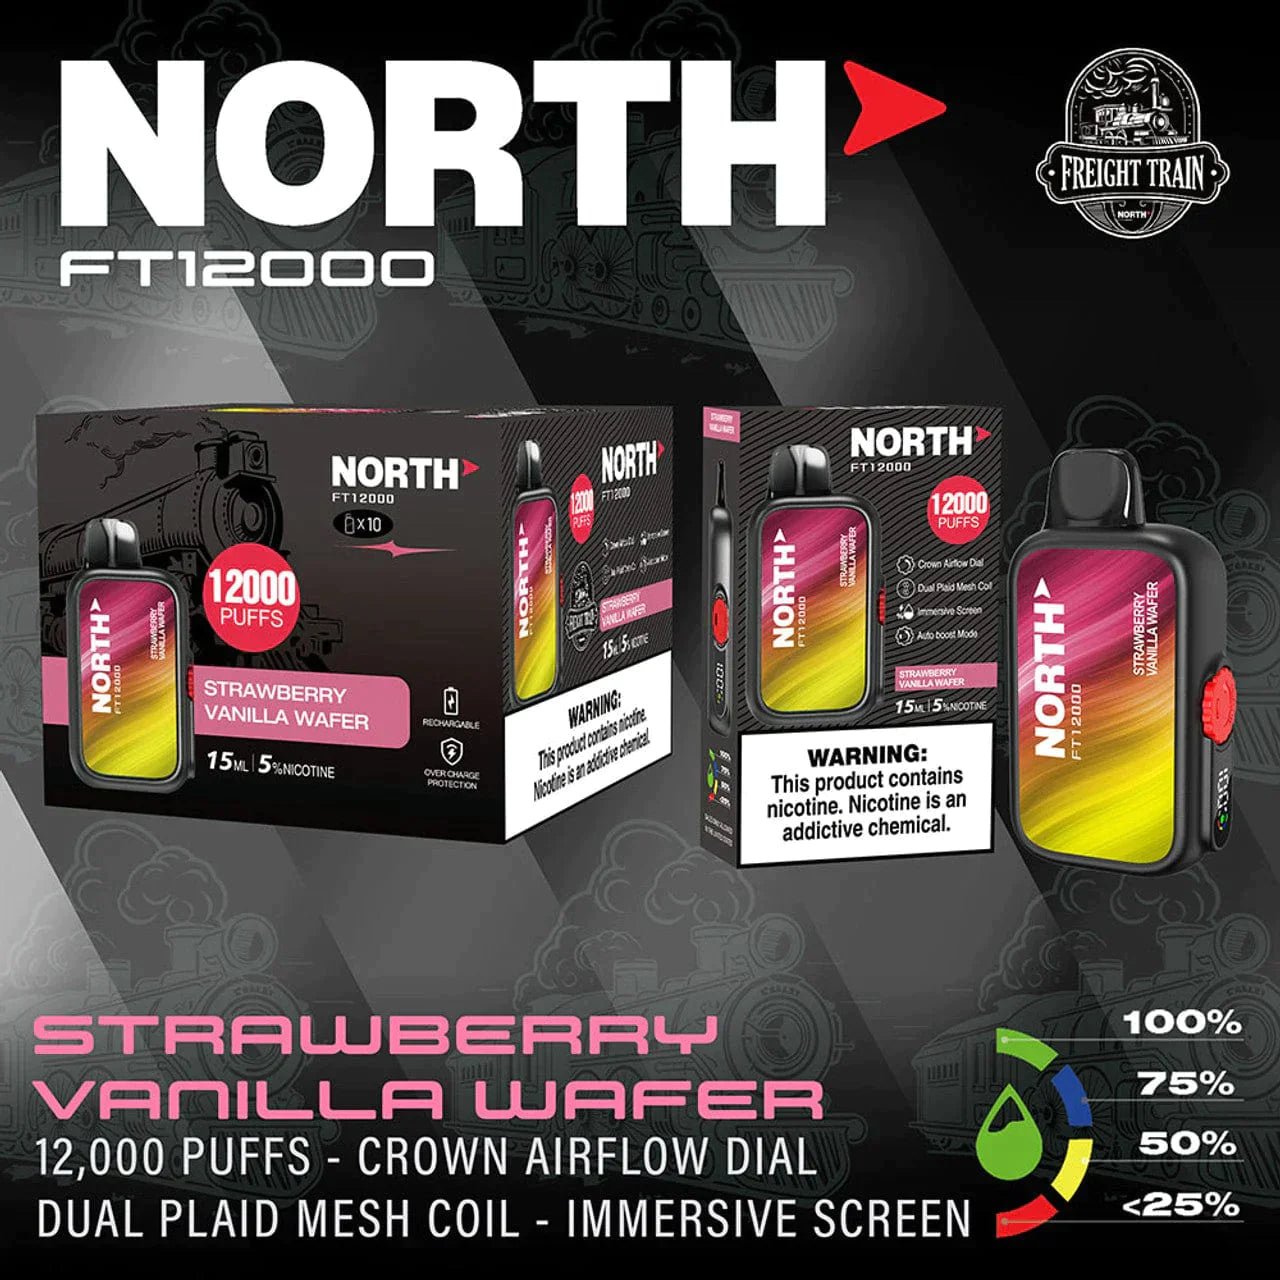 North FT12000 Disposable Vape 15mL Best Flavor Strawberry Vanilla Wafer